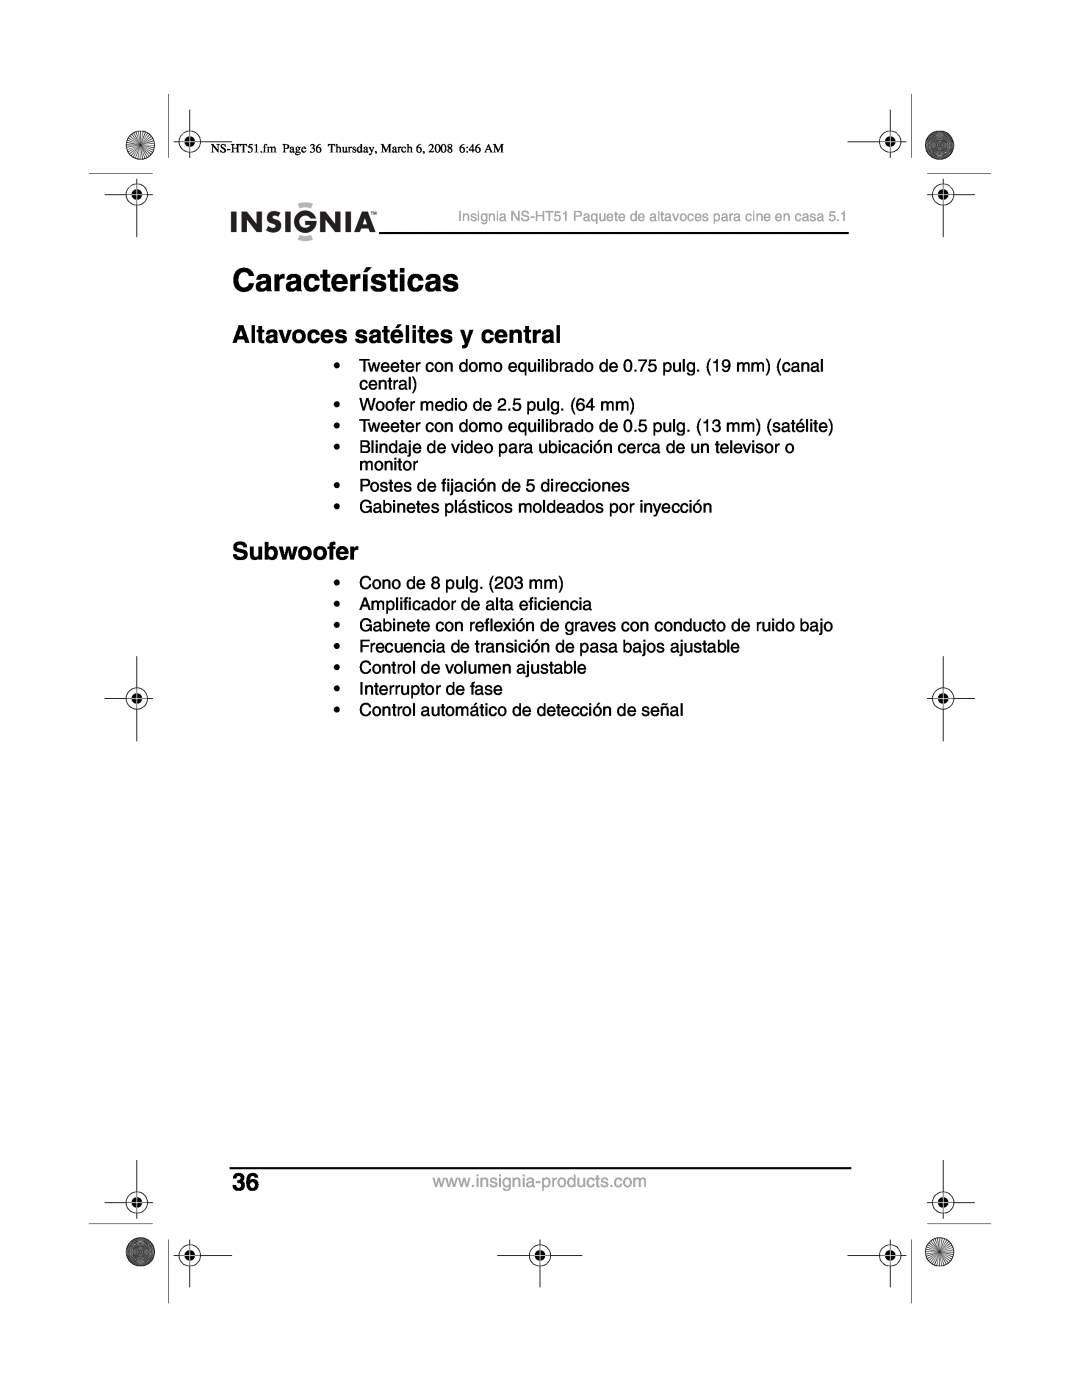 Insignia NS-HT51 manual Características, Altavoces satélites y central, Subwoofer 